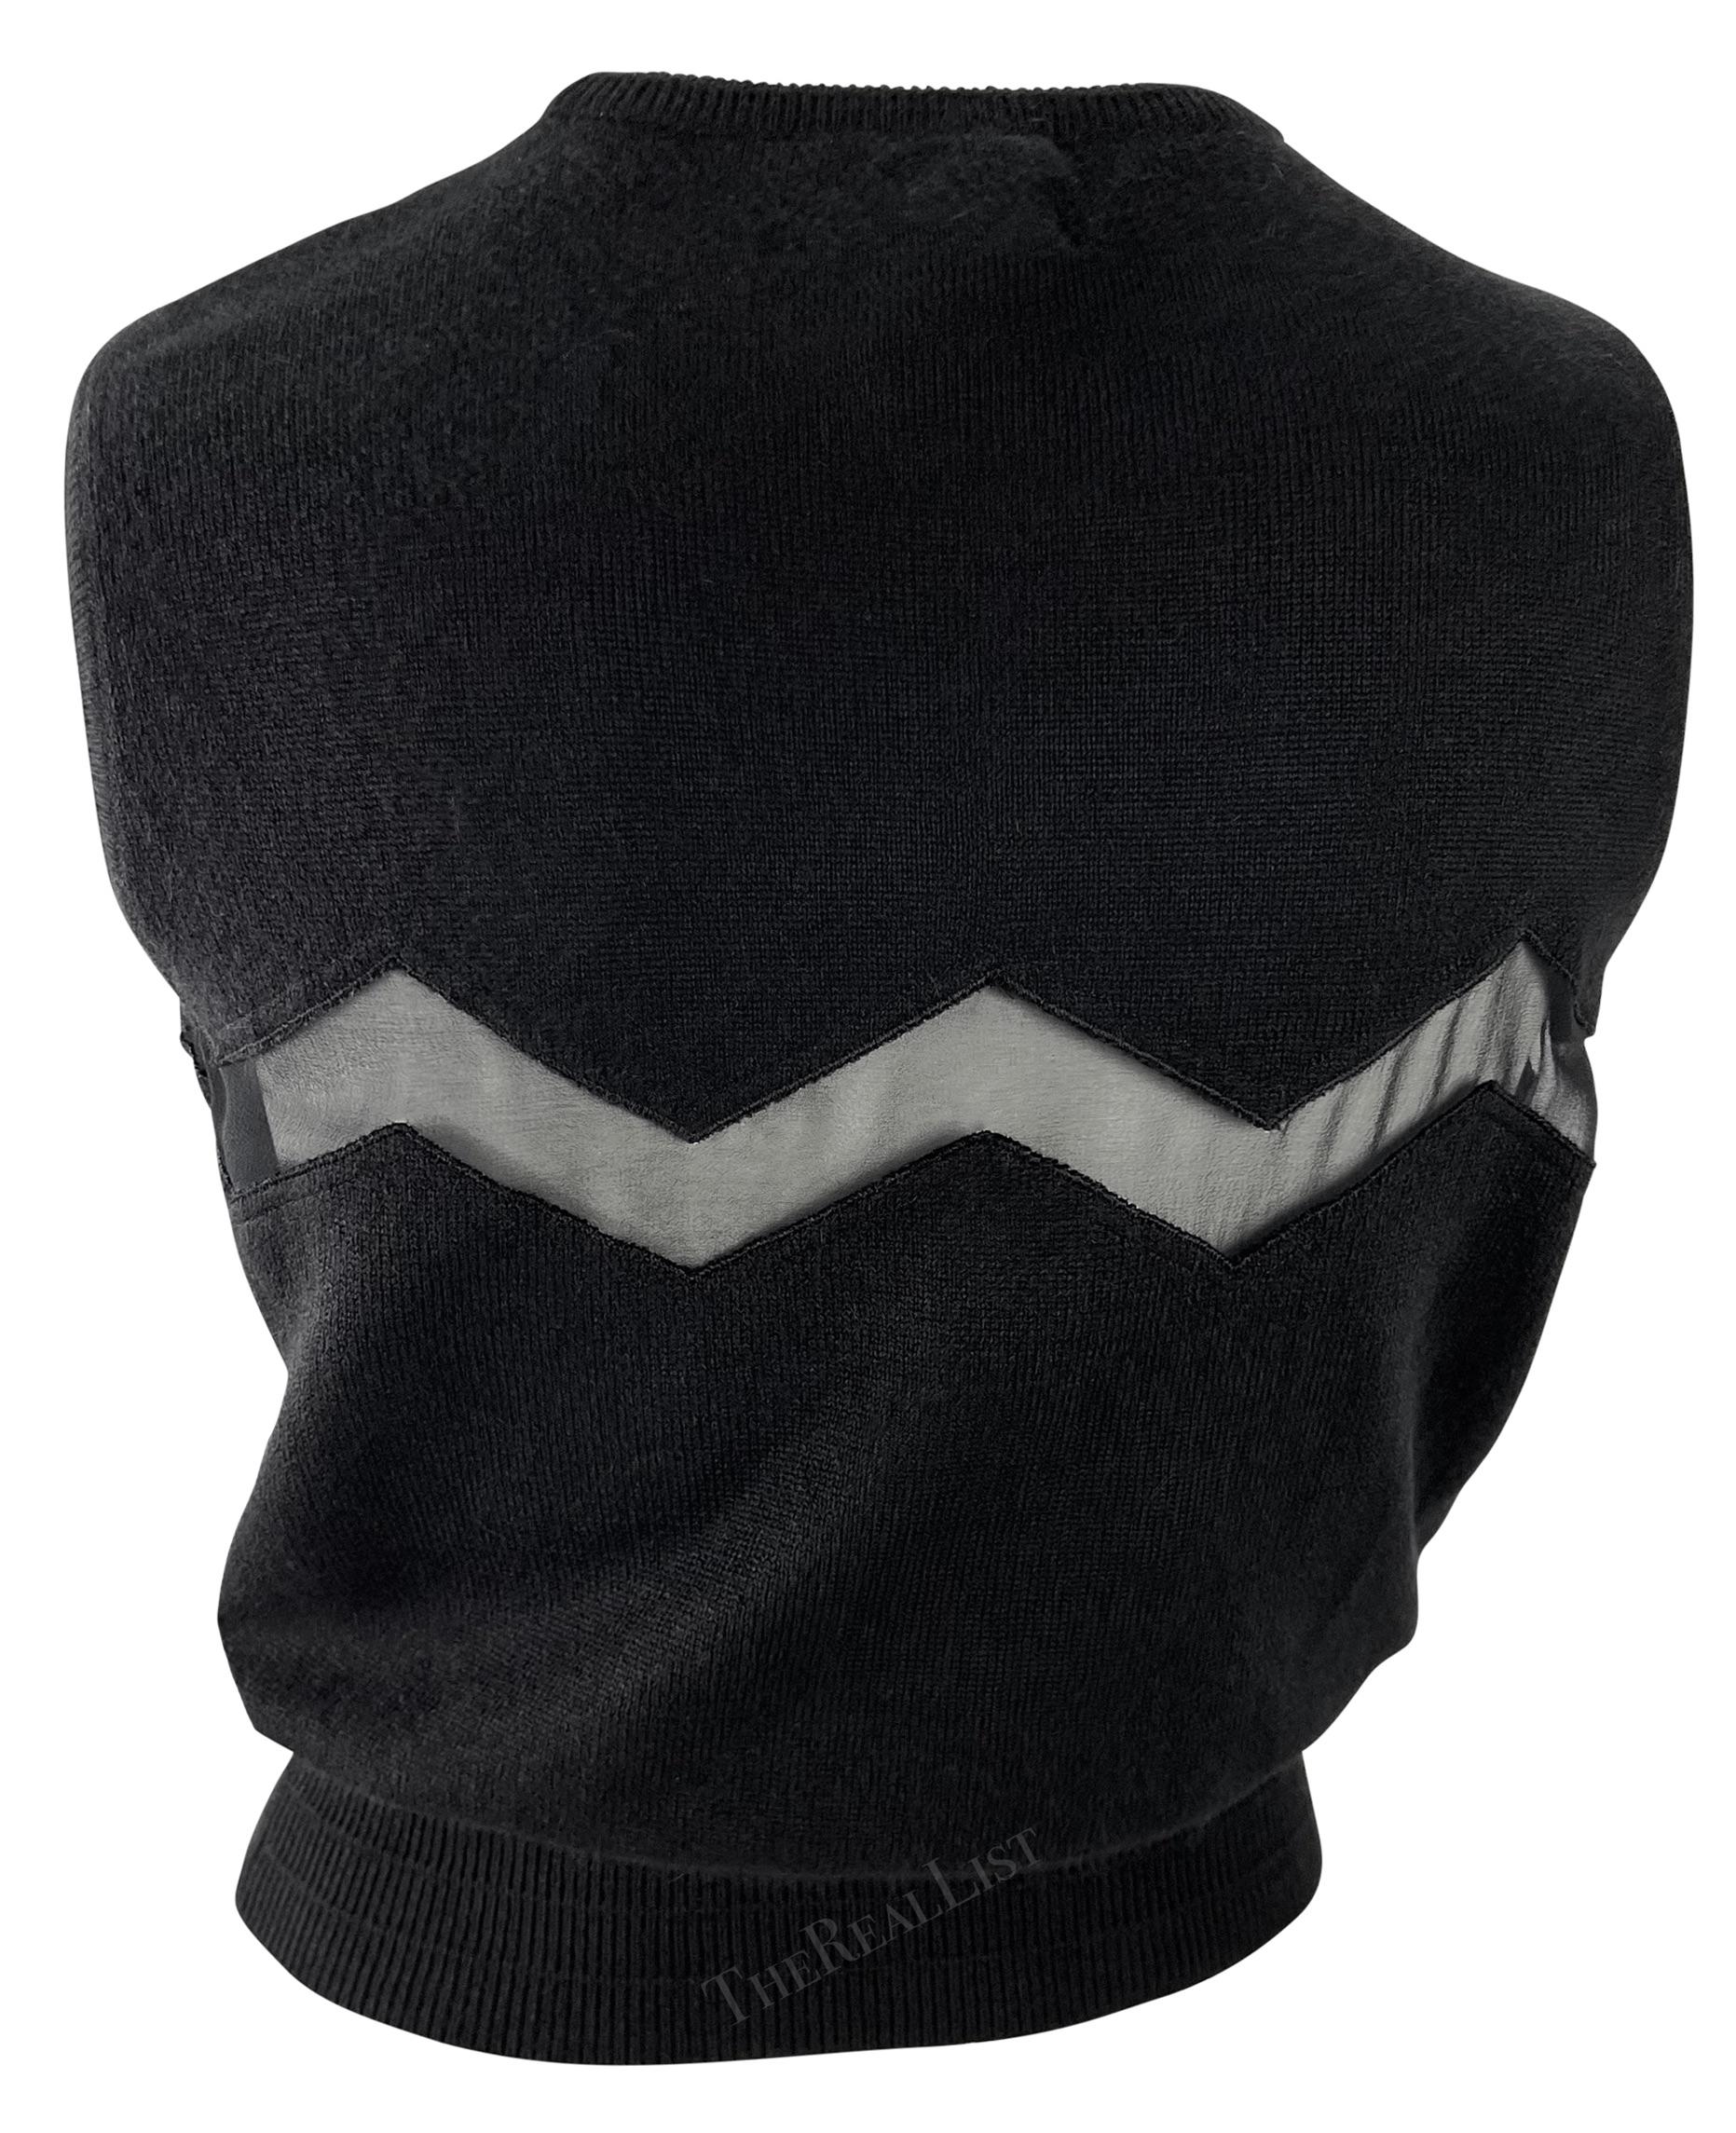 Women's S/S 1994 Gianni Versace Sheer Zig-Zag Panel Black Knit Sweater Vest For Sale